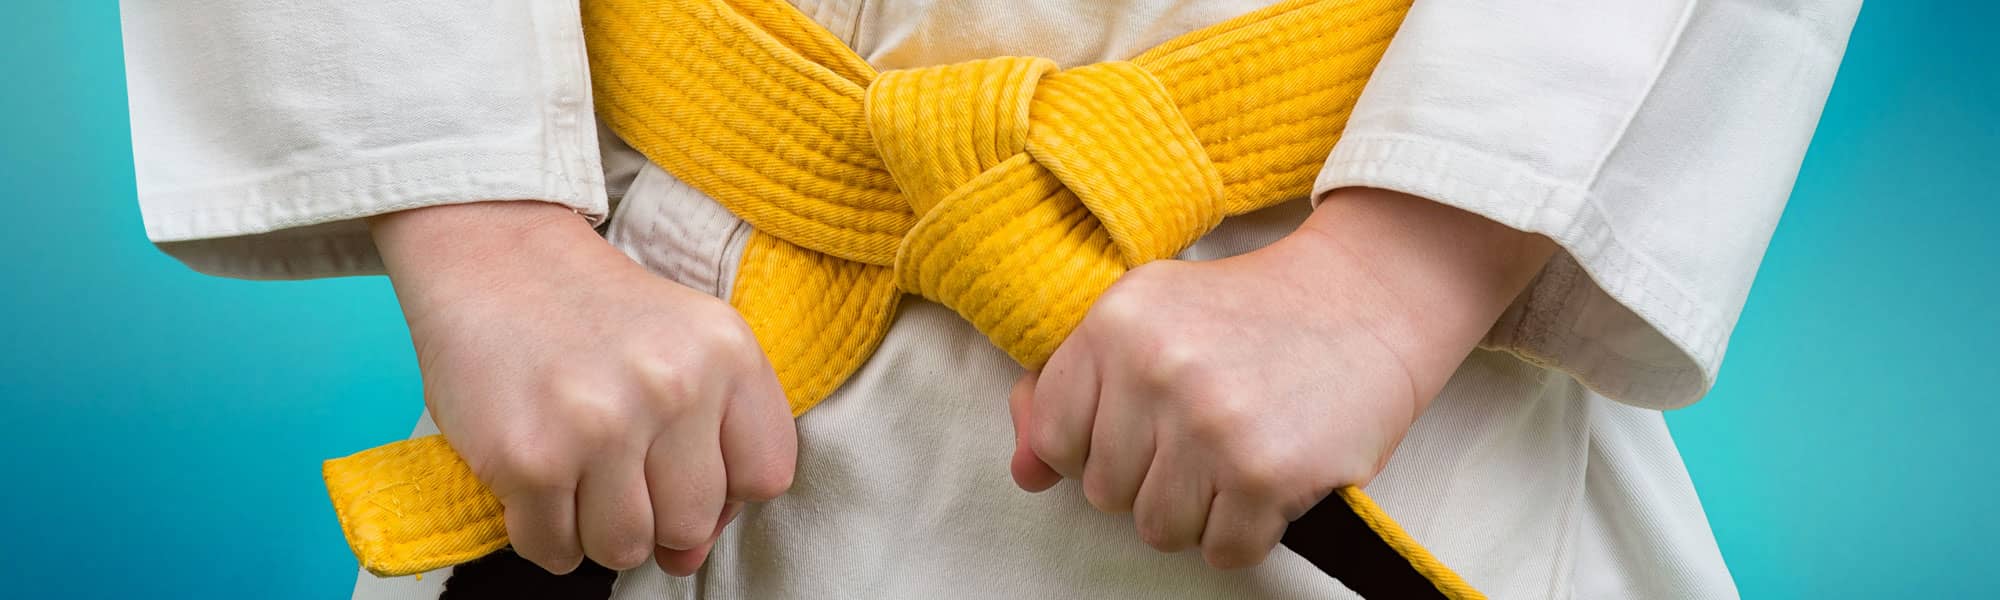 Karate student tying yellow belt